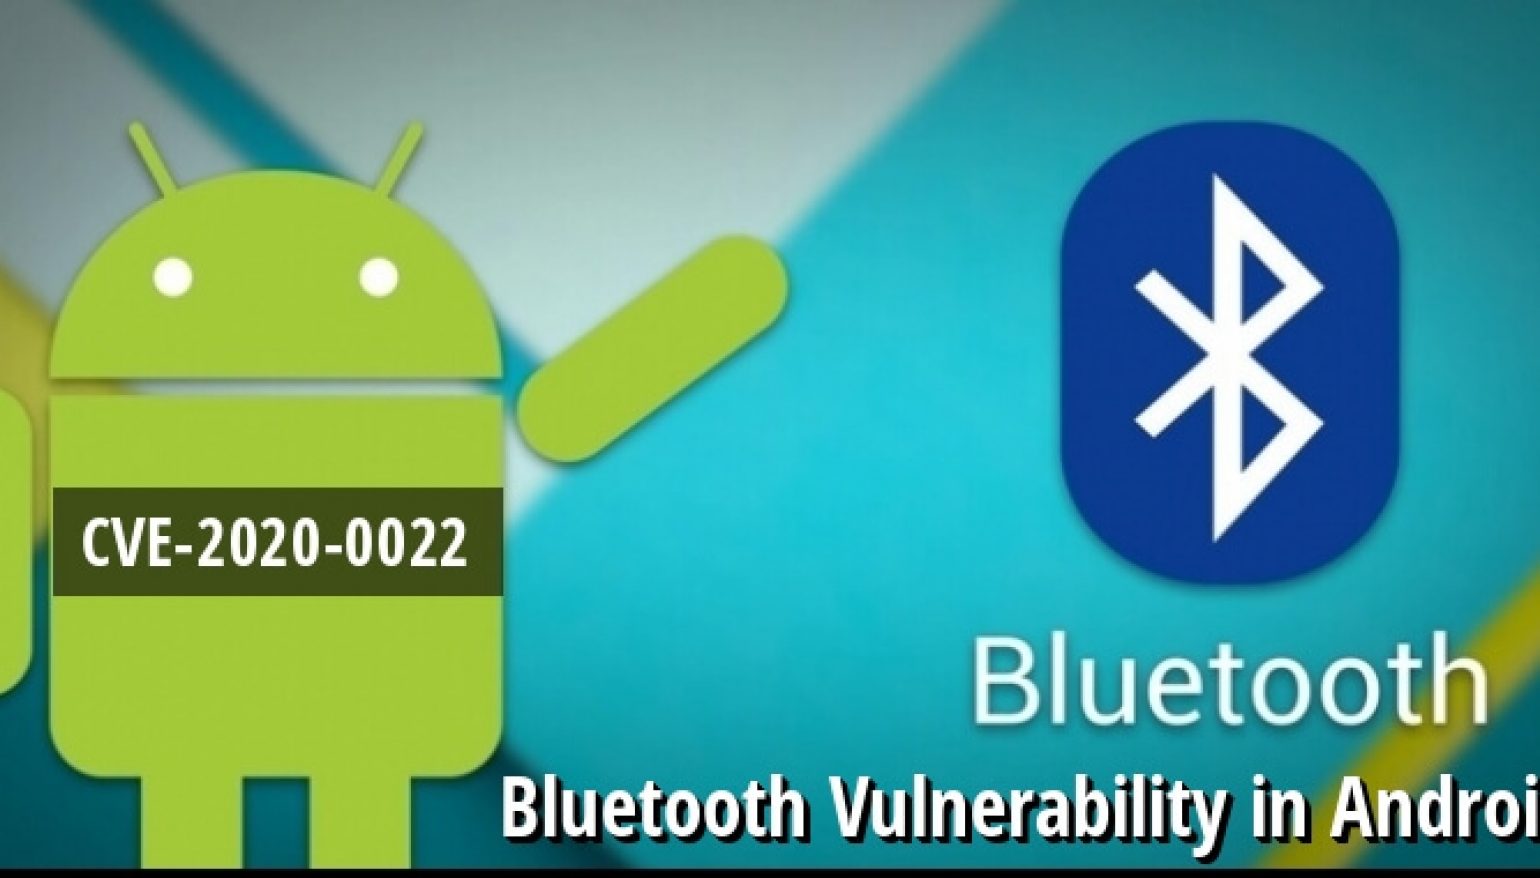 bluetooth version 2.0 edr vulnerability